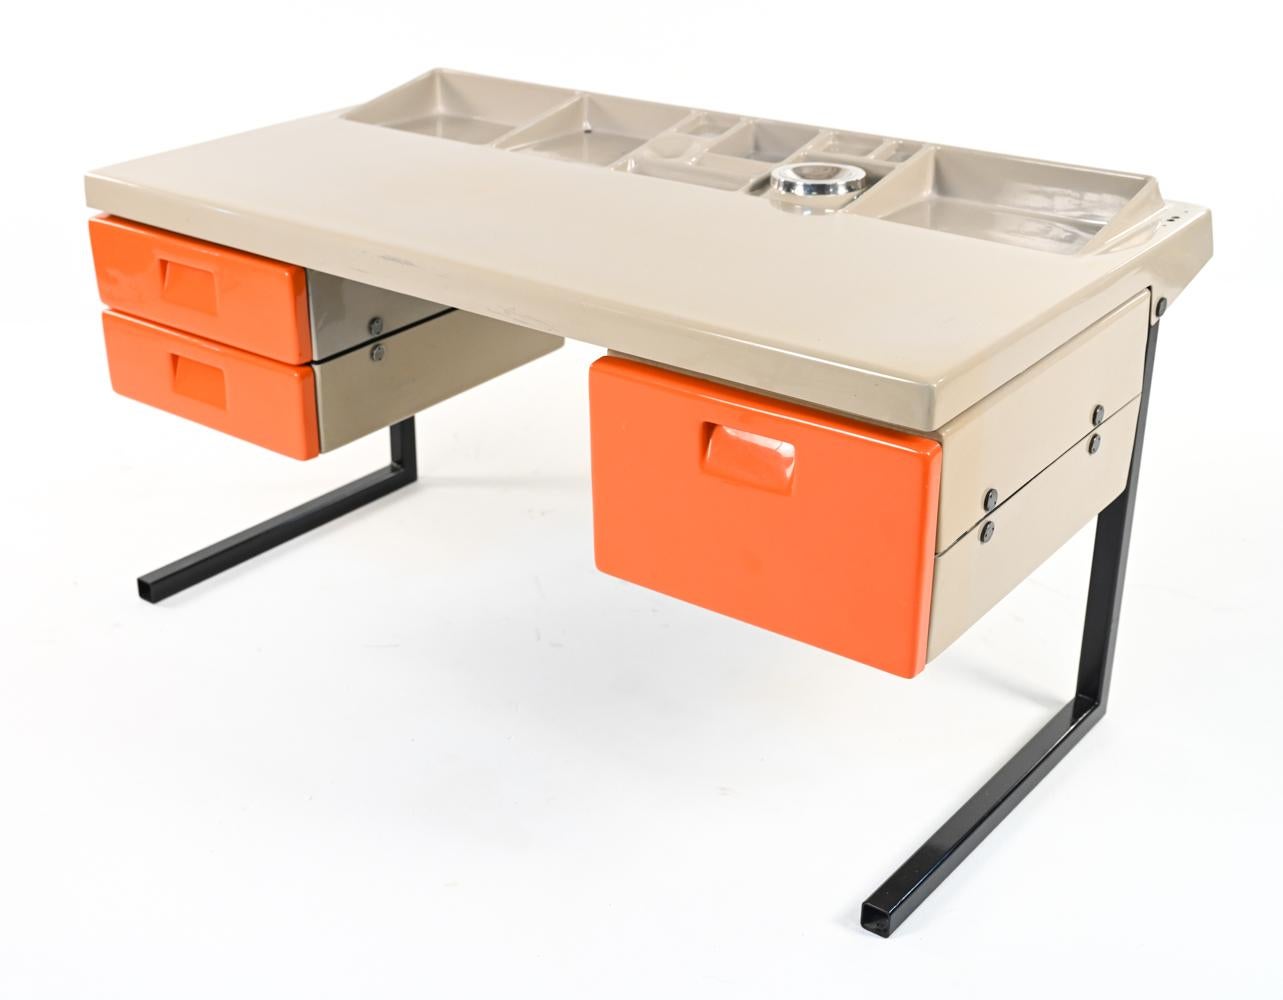 Rare 1970's Jorge Zalszupin L'atelier Space-Age Plastic Desk For Sale 2